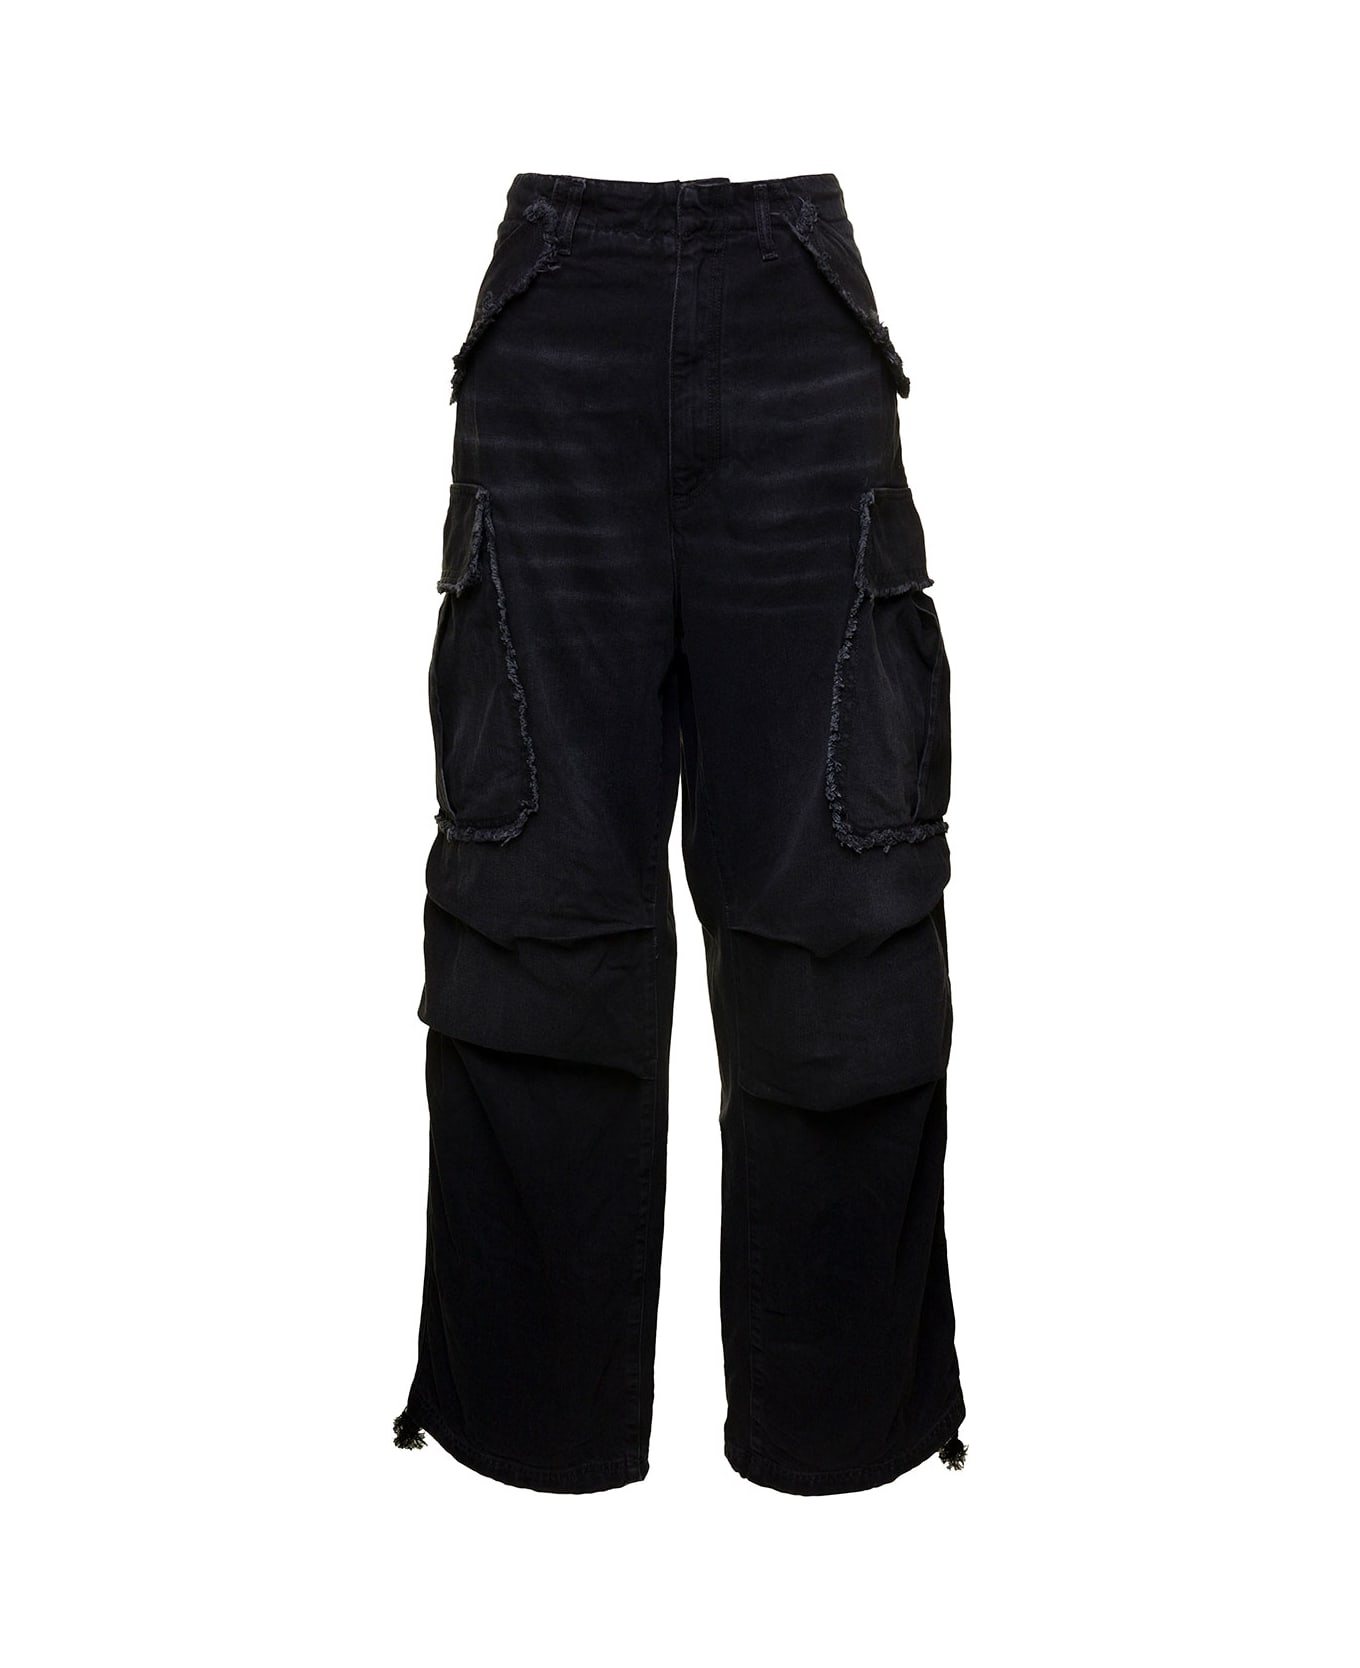 DARKPARK 'vivi' Black Oversized Cargo Jeans With Patch Pockets In Cotton Denim Woman - Black ボトムス